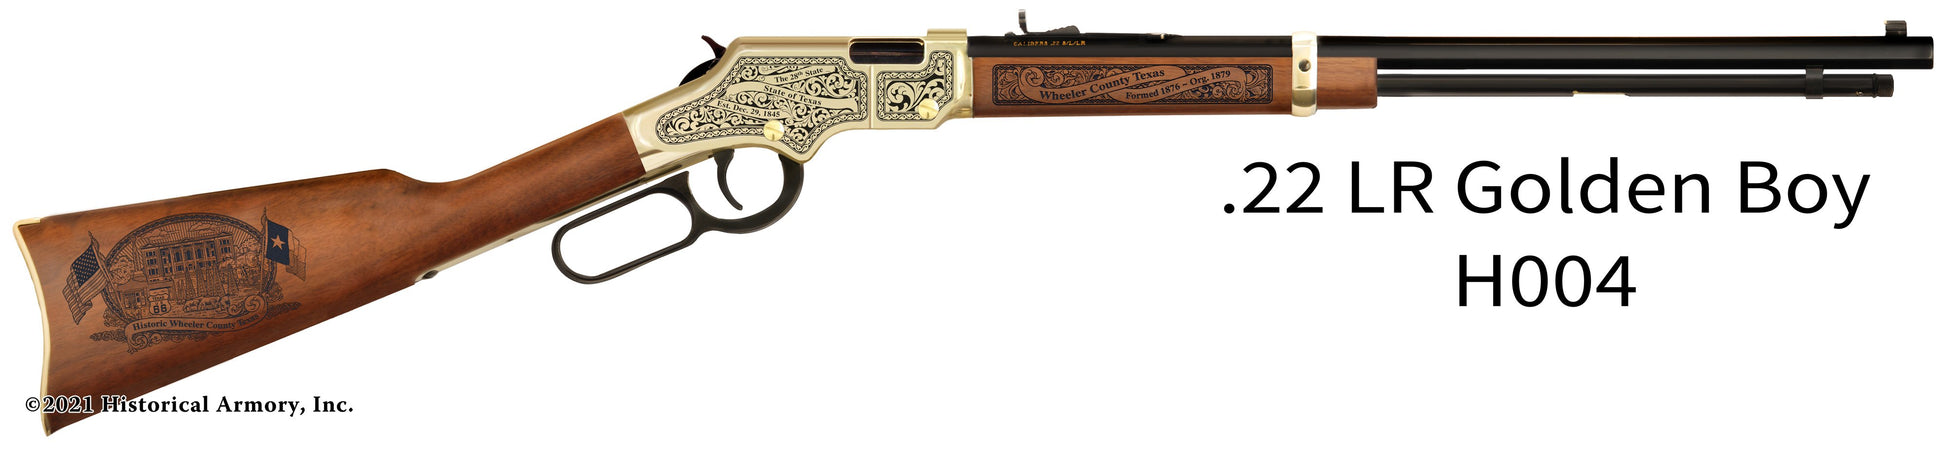 Wheeler County Texas History Engraved  Rifle Henry Golden Boy .22 | Historical Armory